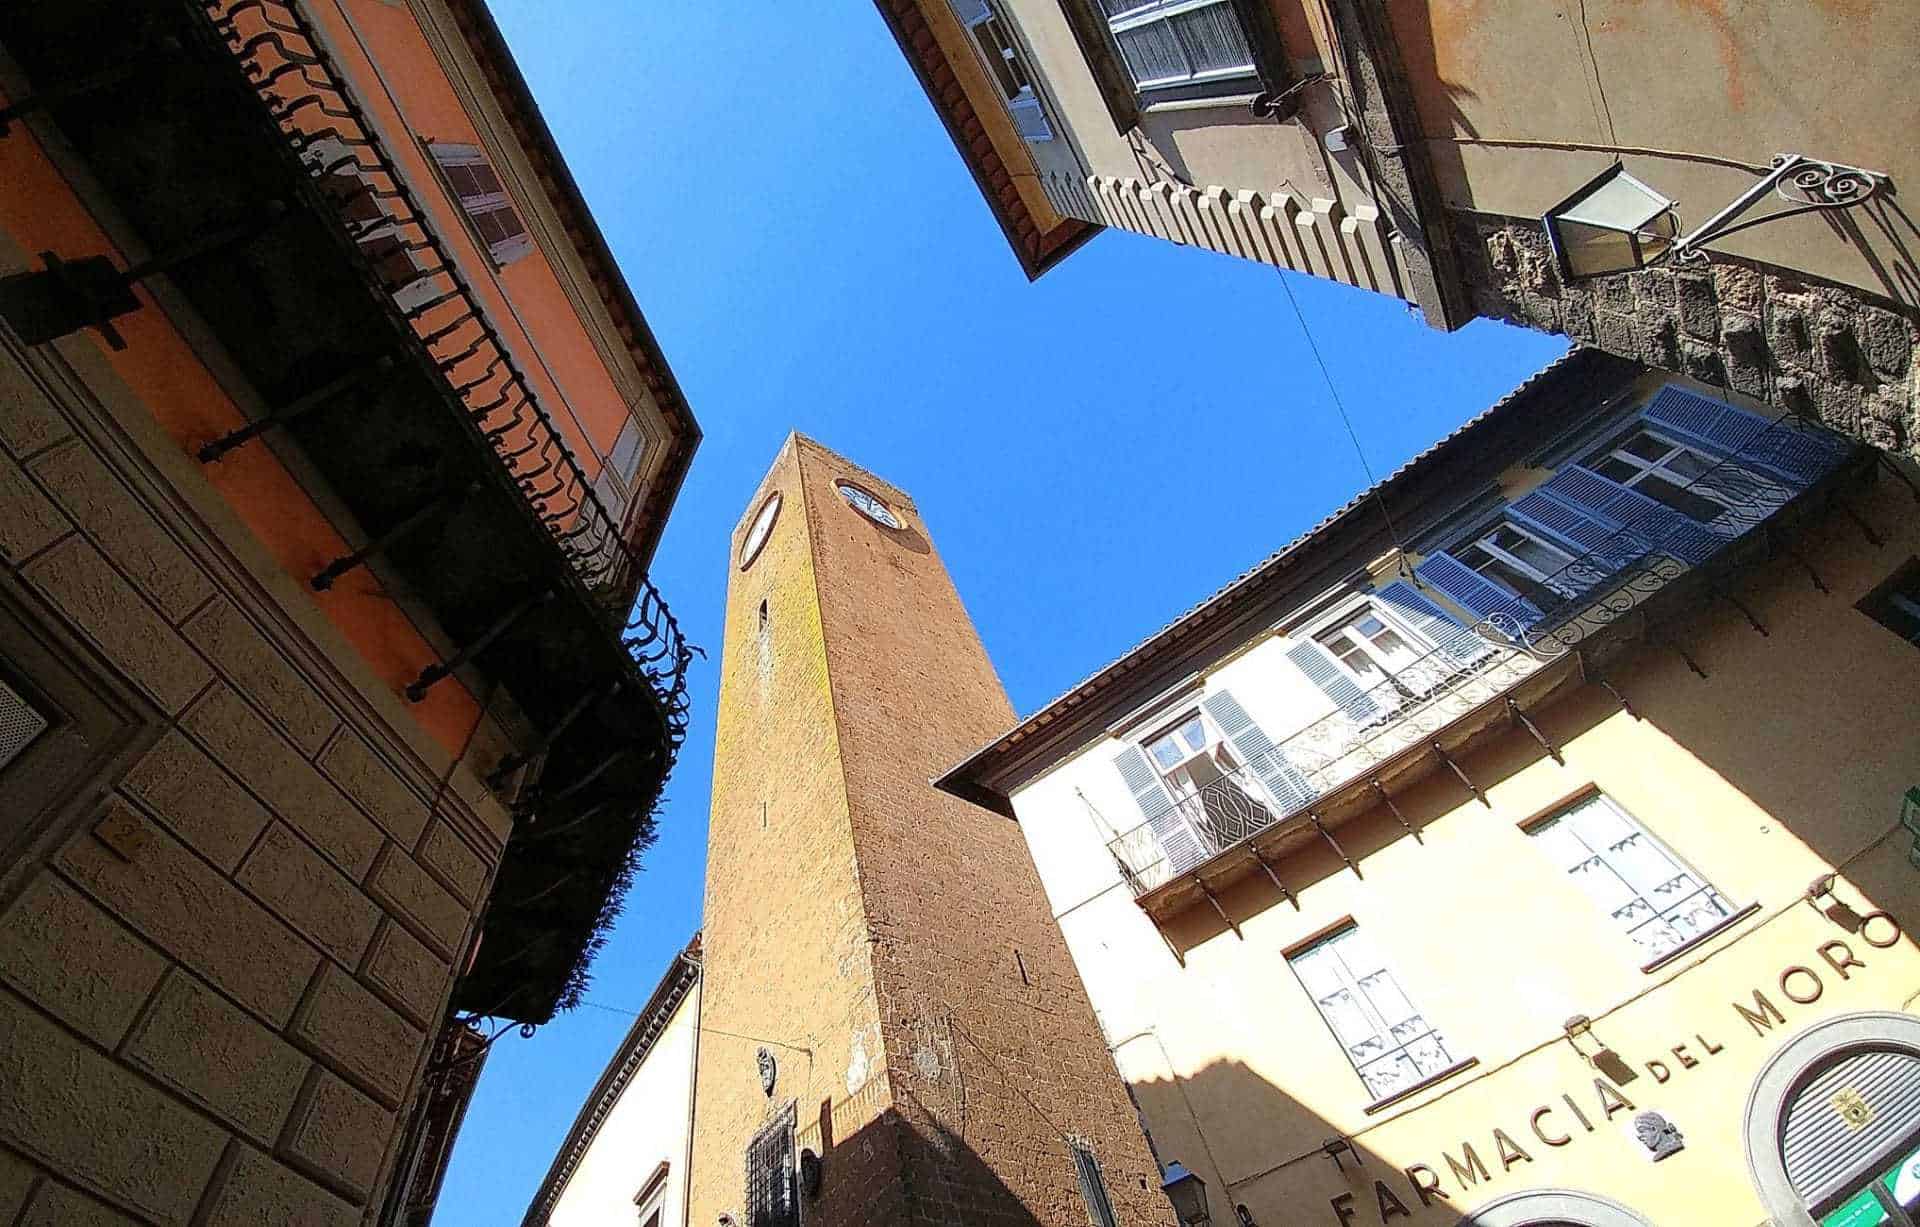 Torre del Moro Orvieto